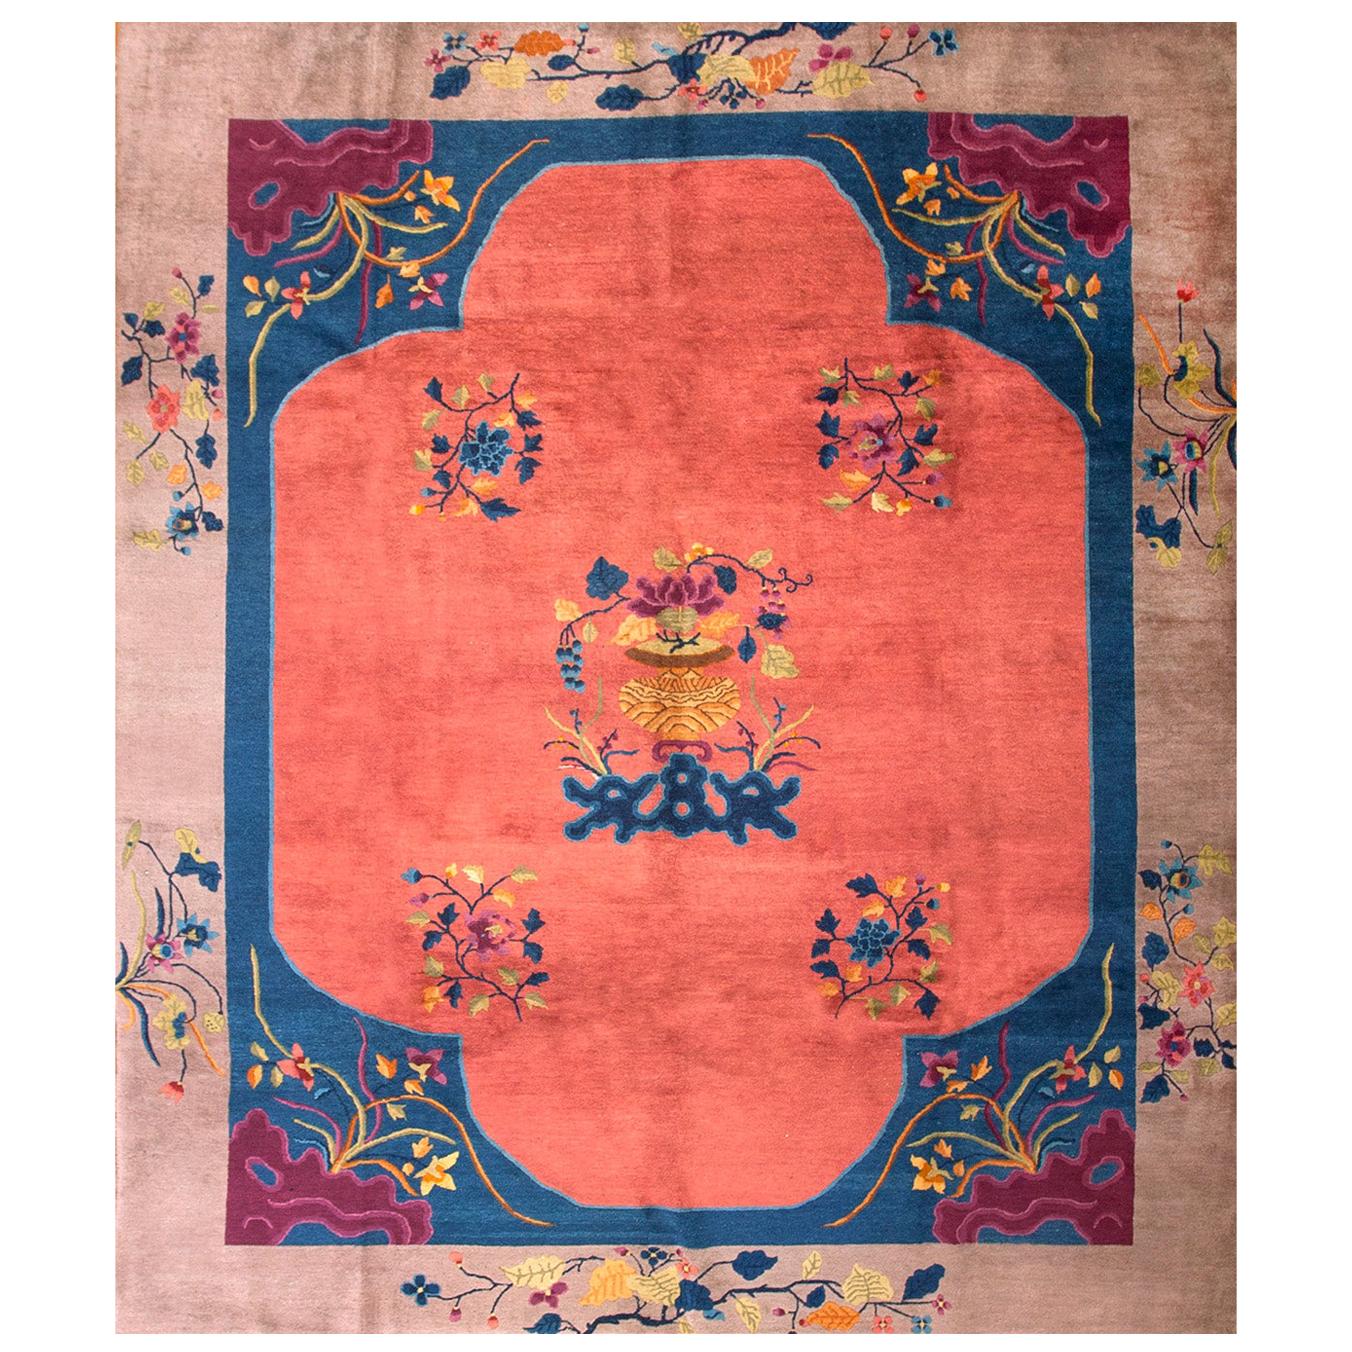 1920s Chinese Art Deco Carpet by Nichols Workshop ( 8'2" x 9'9" - 250 x 297 ) For Sale